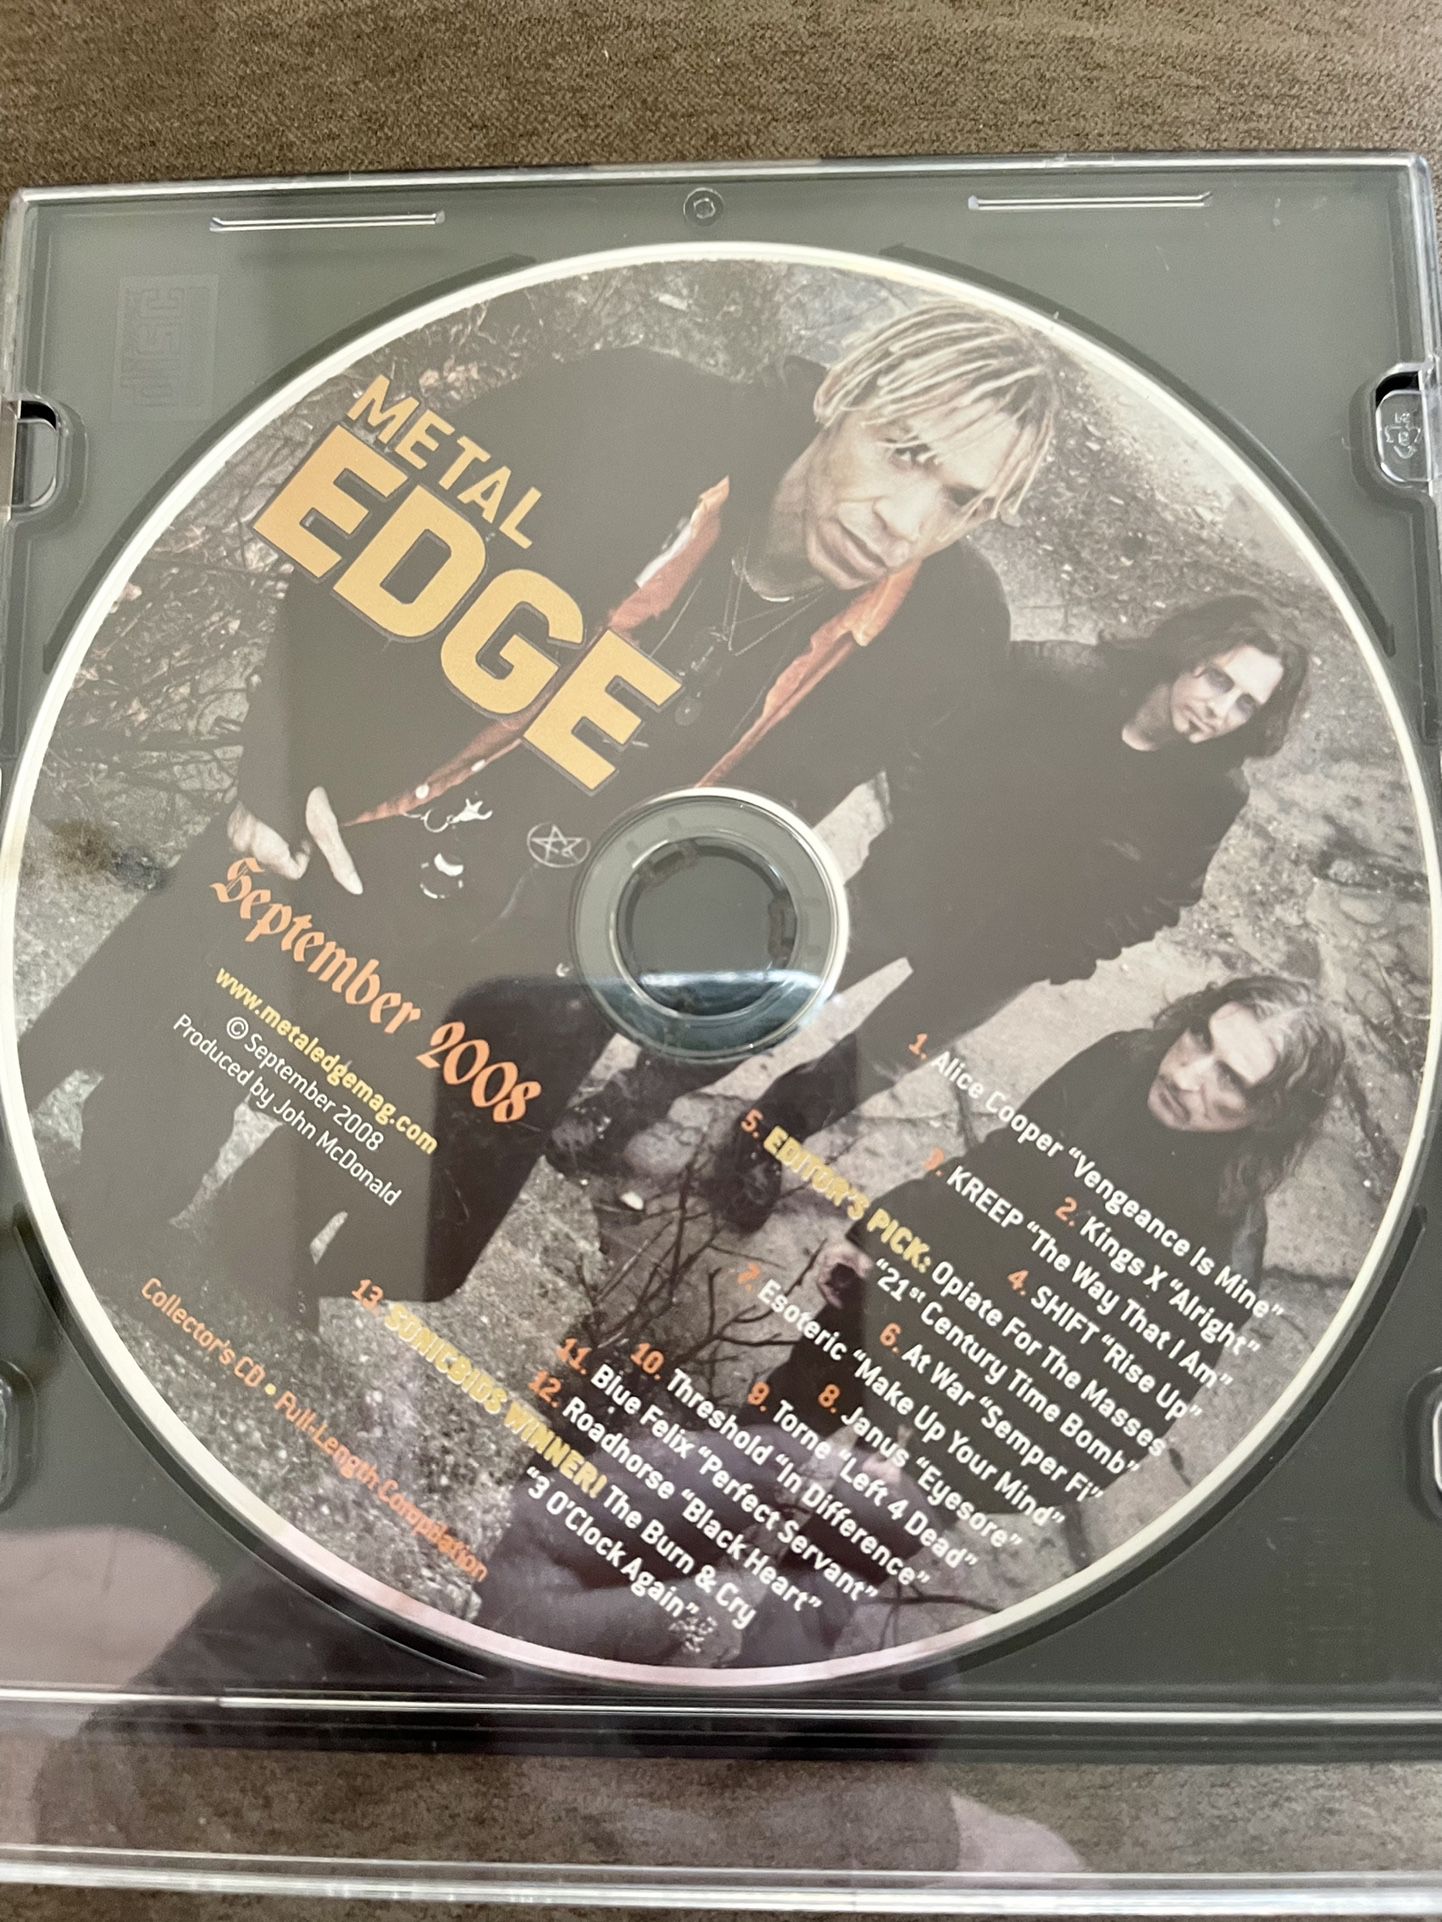   Rare Metal Edge September 2008 CD Music Playlist Collectors Kreep Threshold 